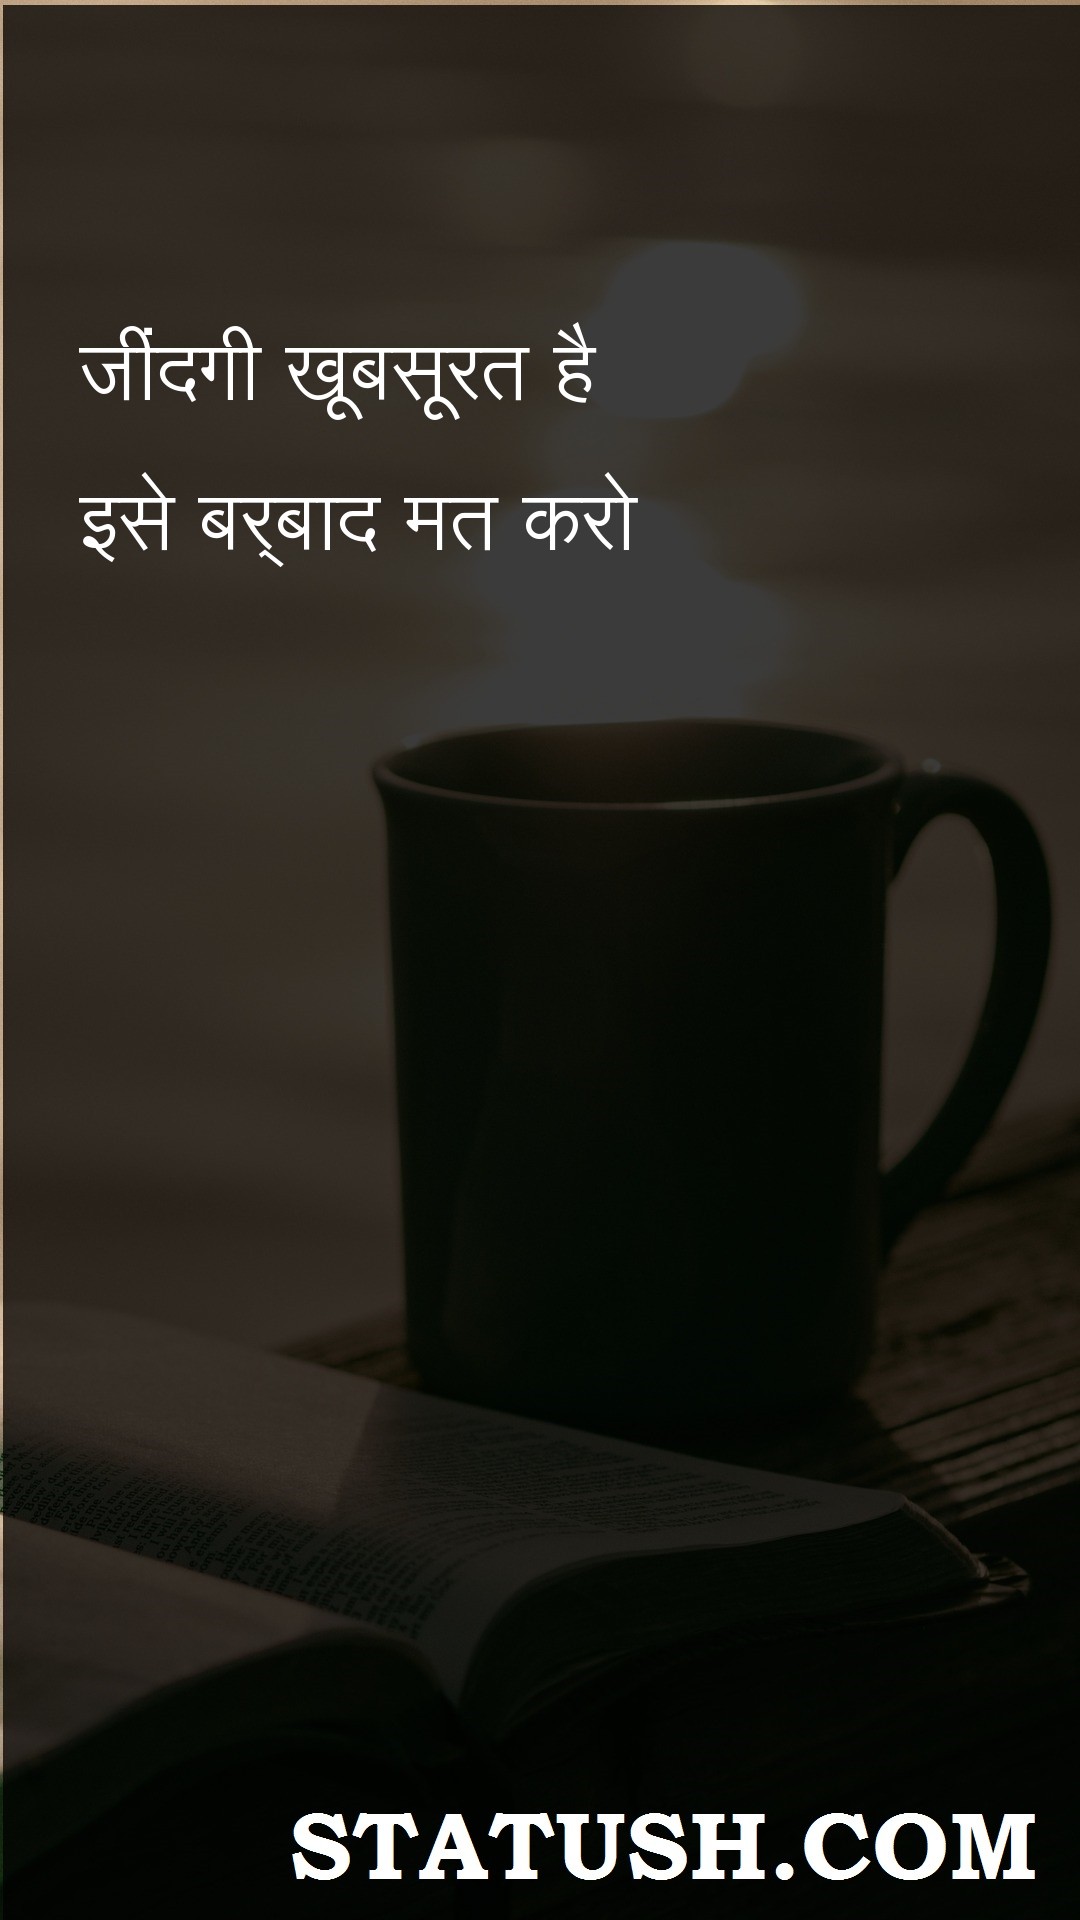 Life is beautiful dont waste it - Hindi Quotes at statush.com